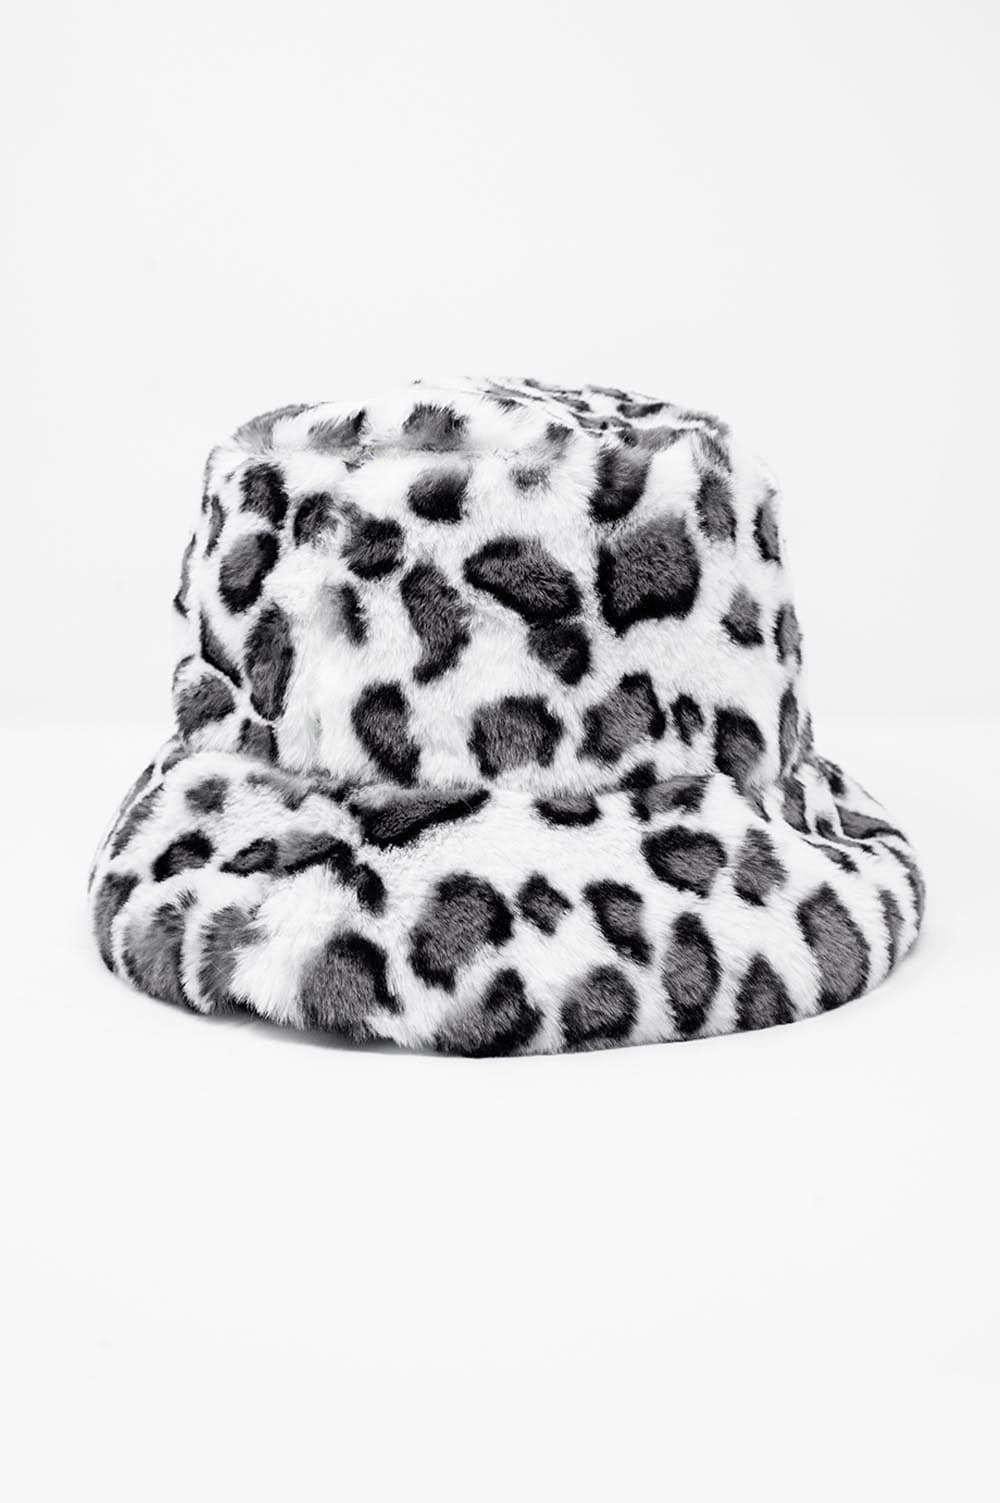 Q2 Women's Hat One Size / White / China White Bucket Hat in Animal Print